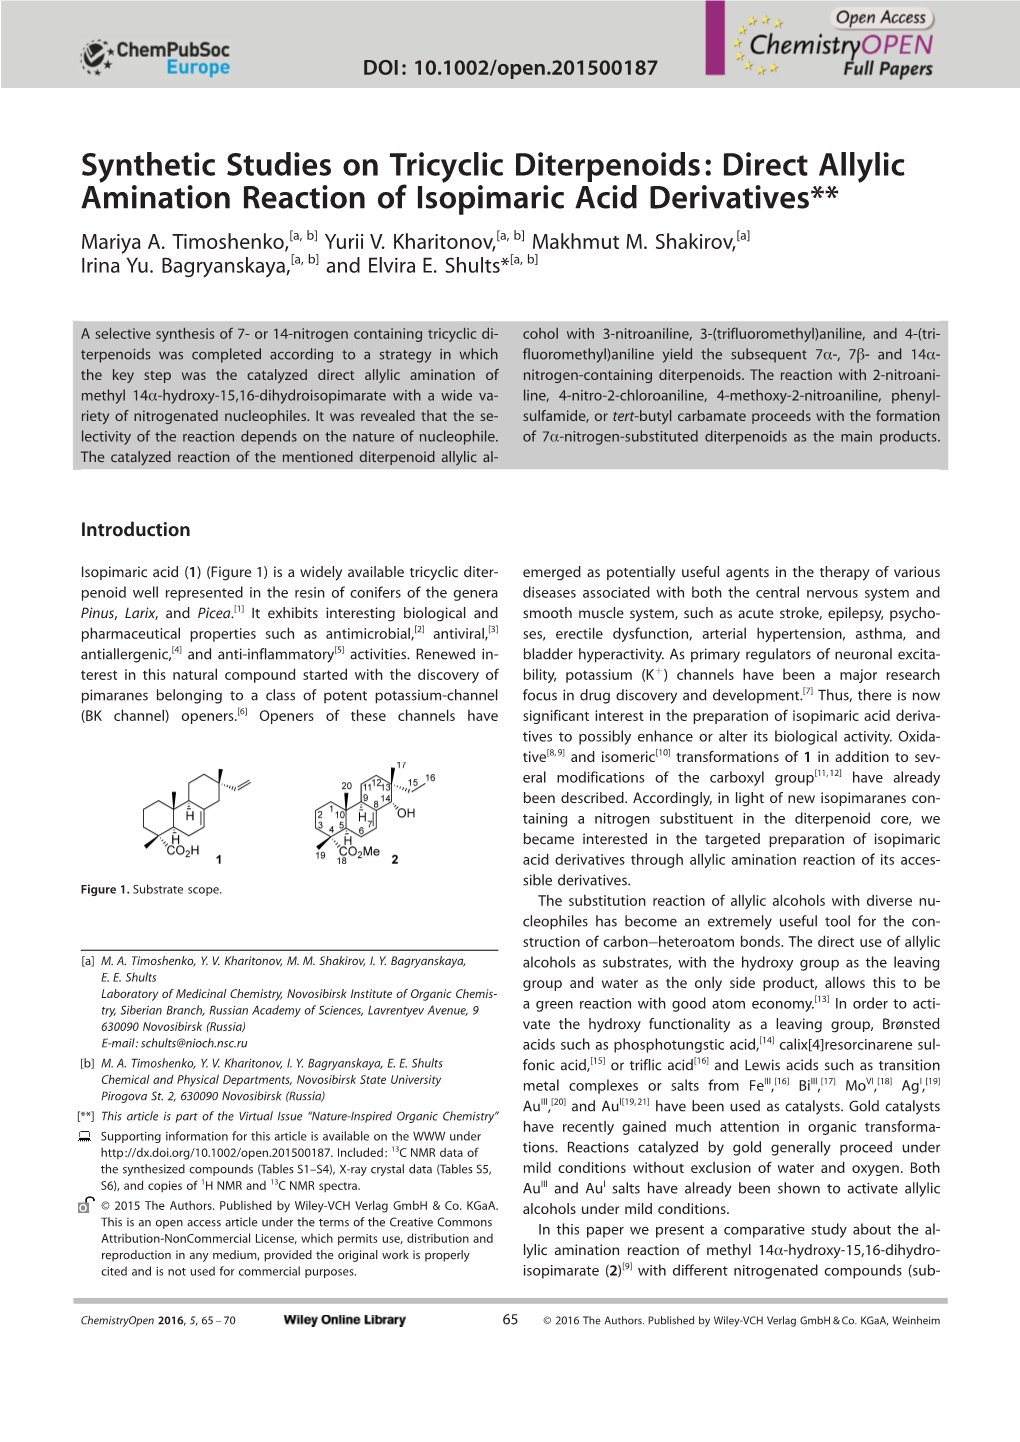 Direct Allylic Amination Reaction of Isopimaric Acid Derivatives** Mariyaa.Timoshenko,[A, B] Yurii V